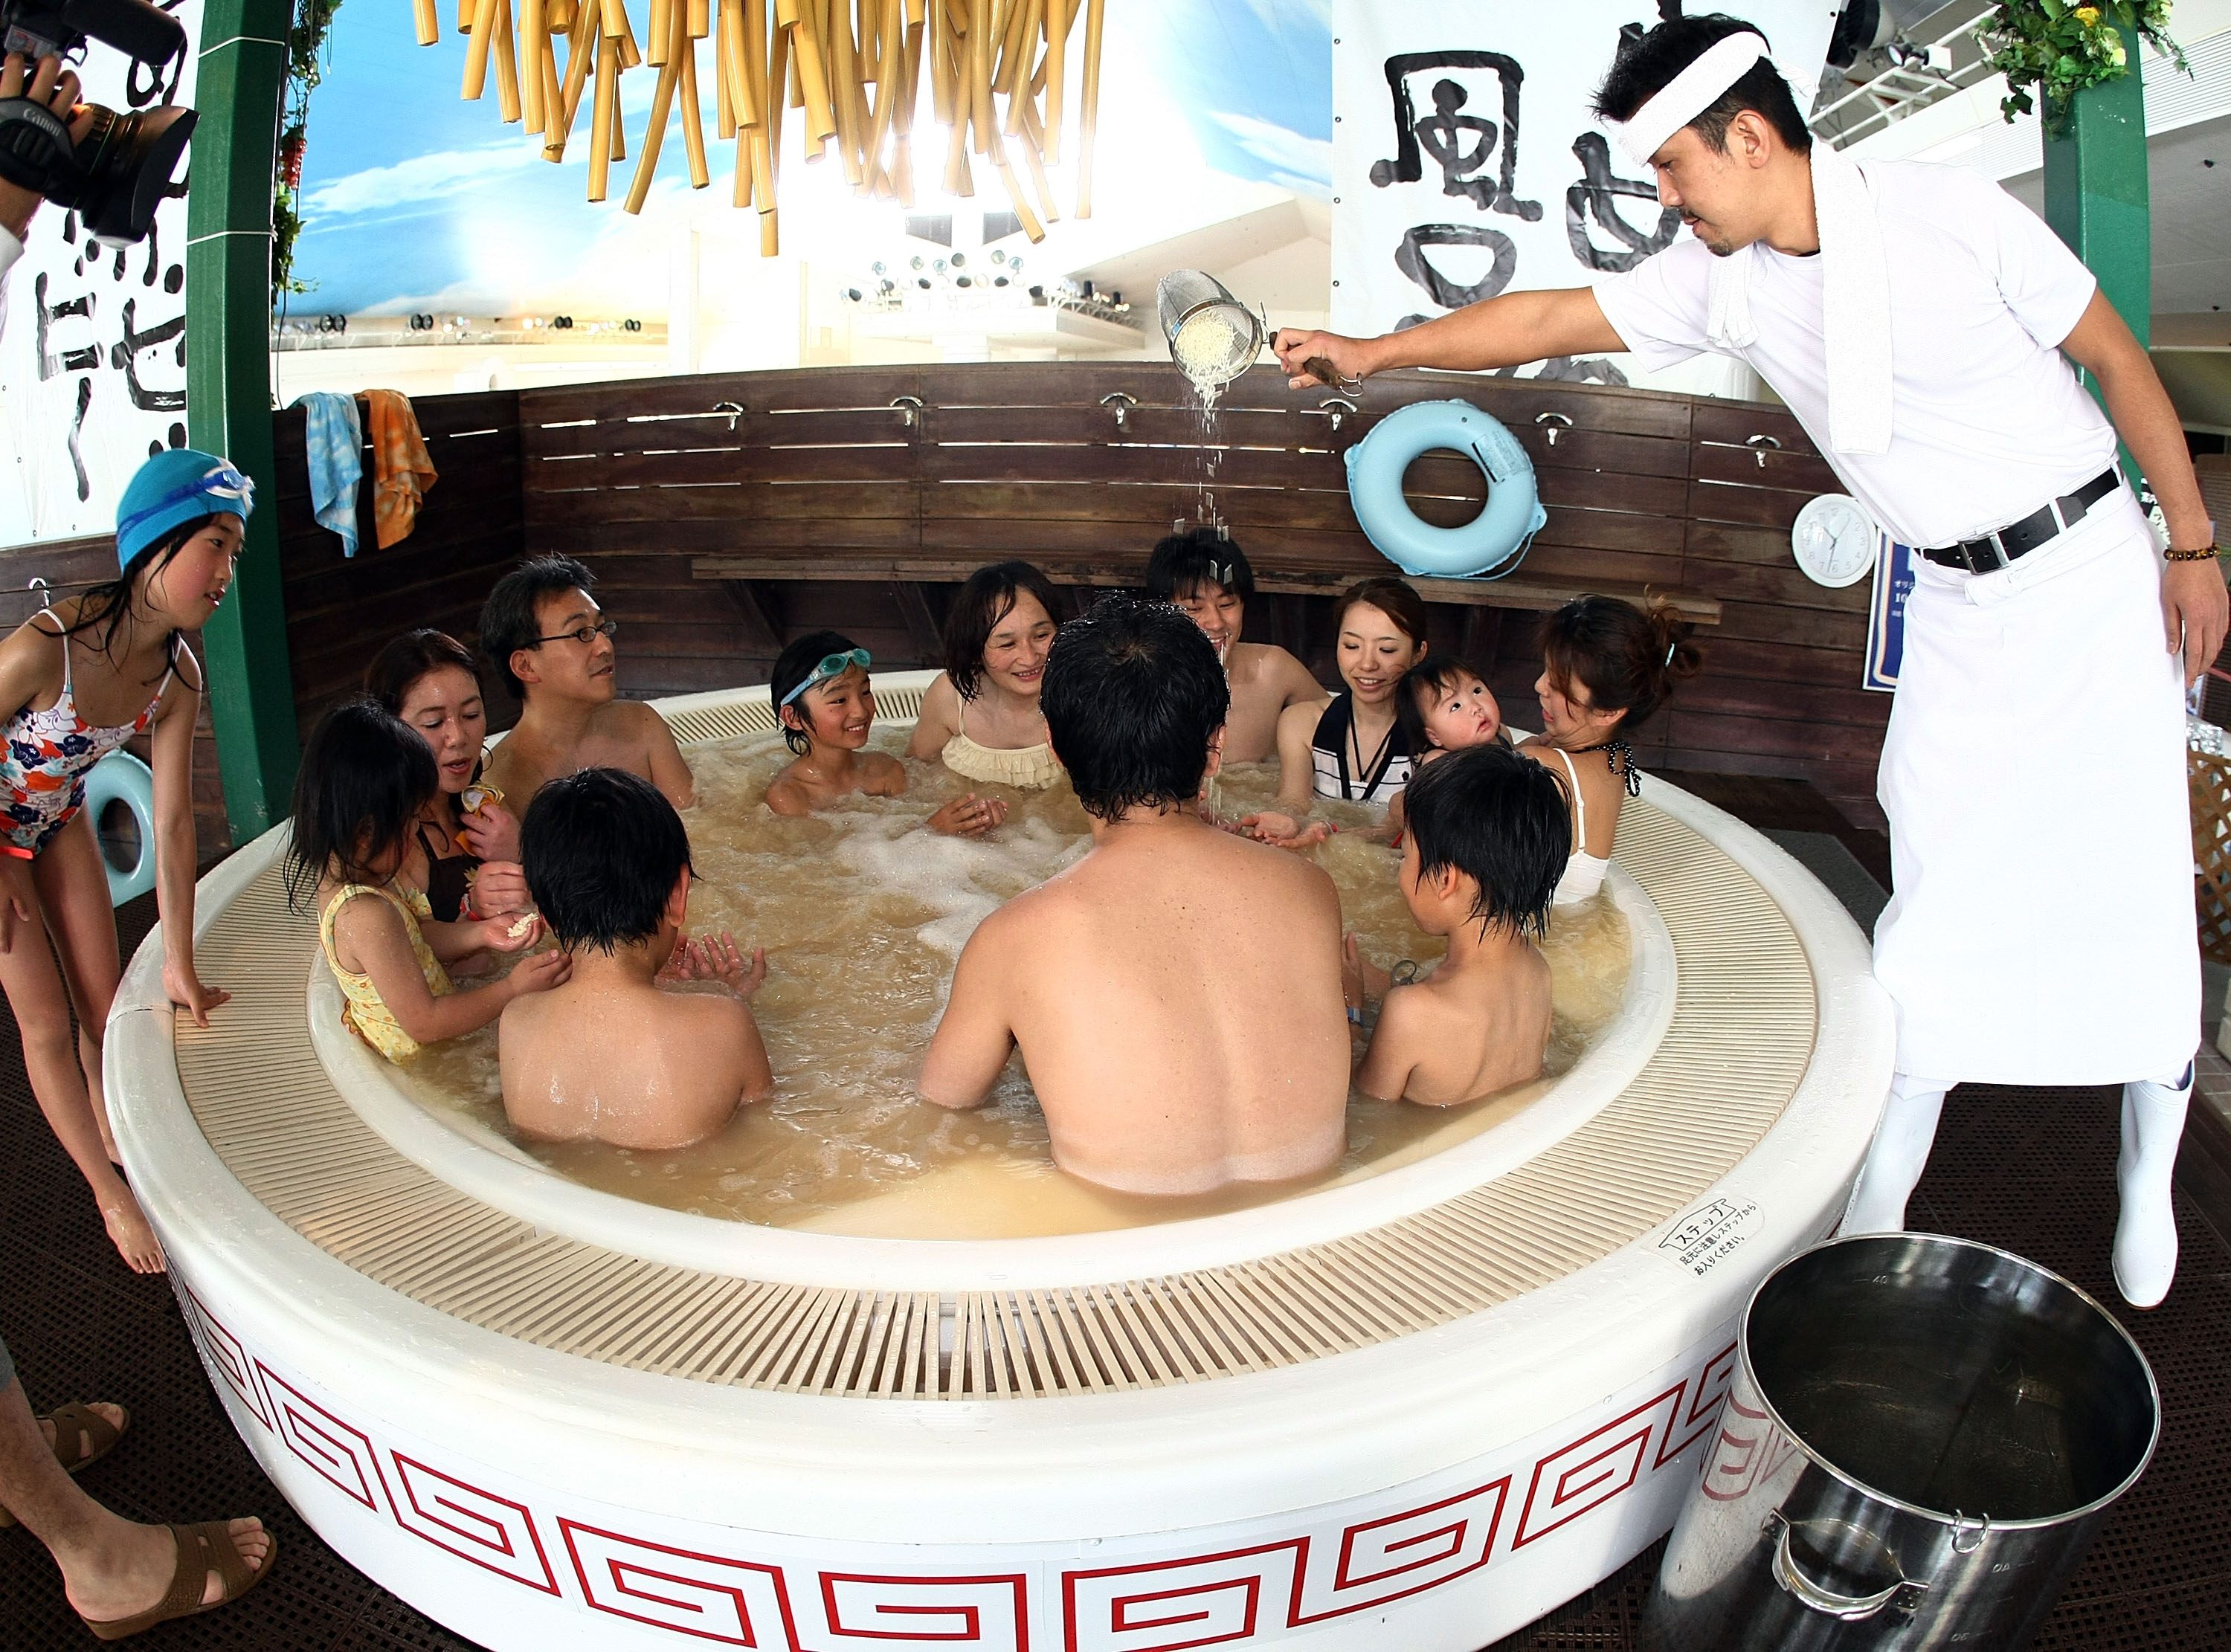 Японская общая купальня. Японская смешанная баня сэнто. Общественная японская баня сэнто. Сэнто баня в Японии. Сэнто баня в Японии женская.